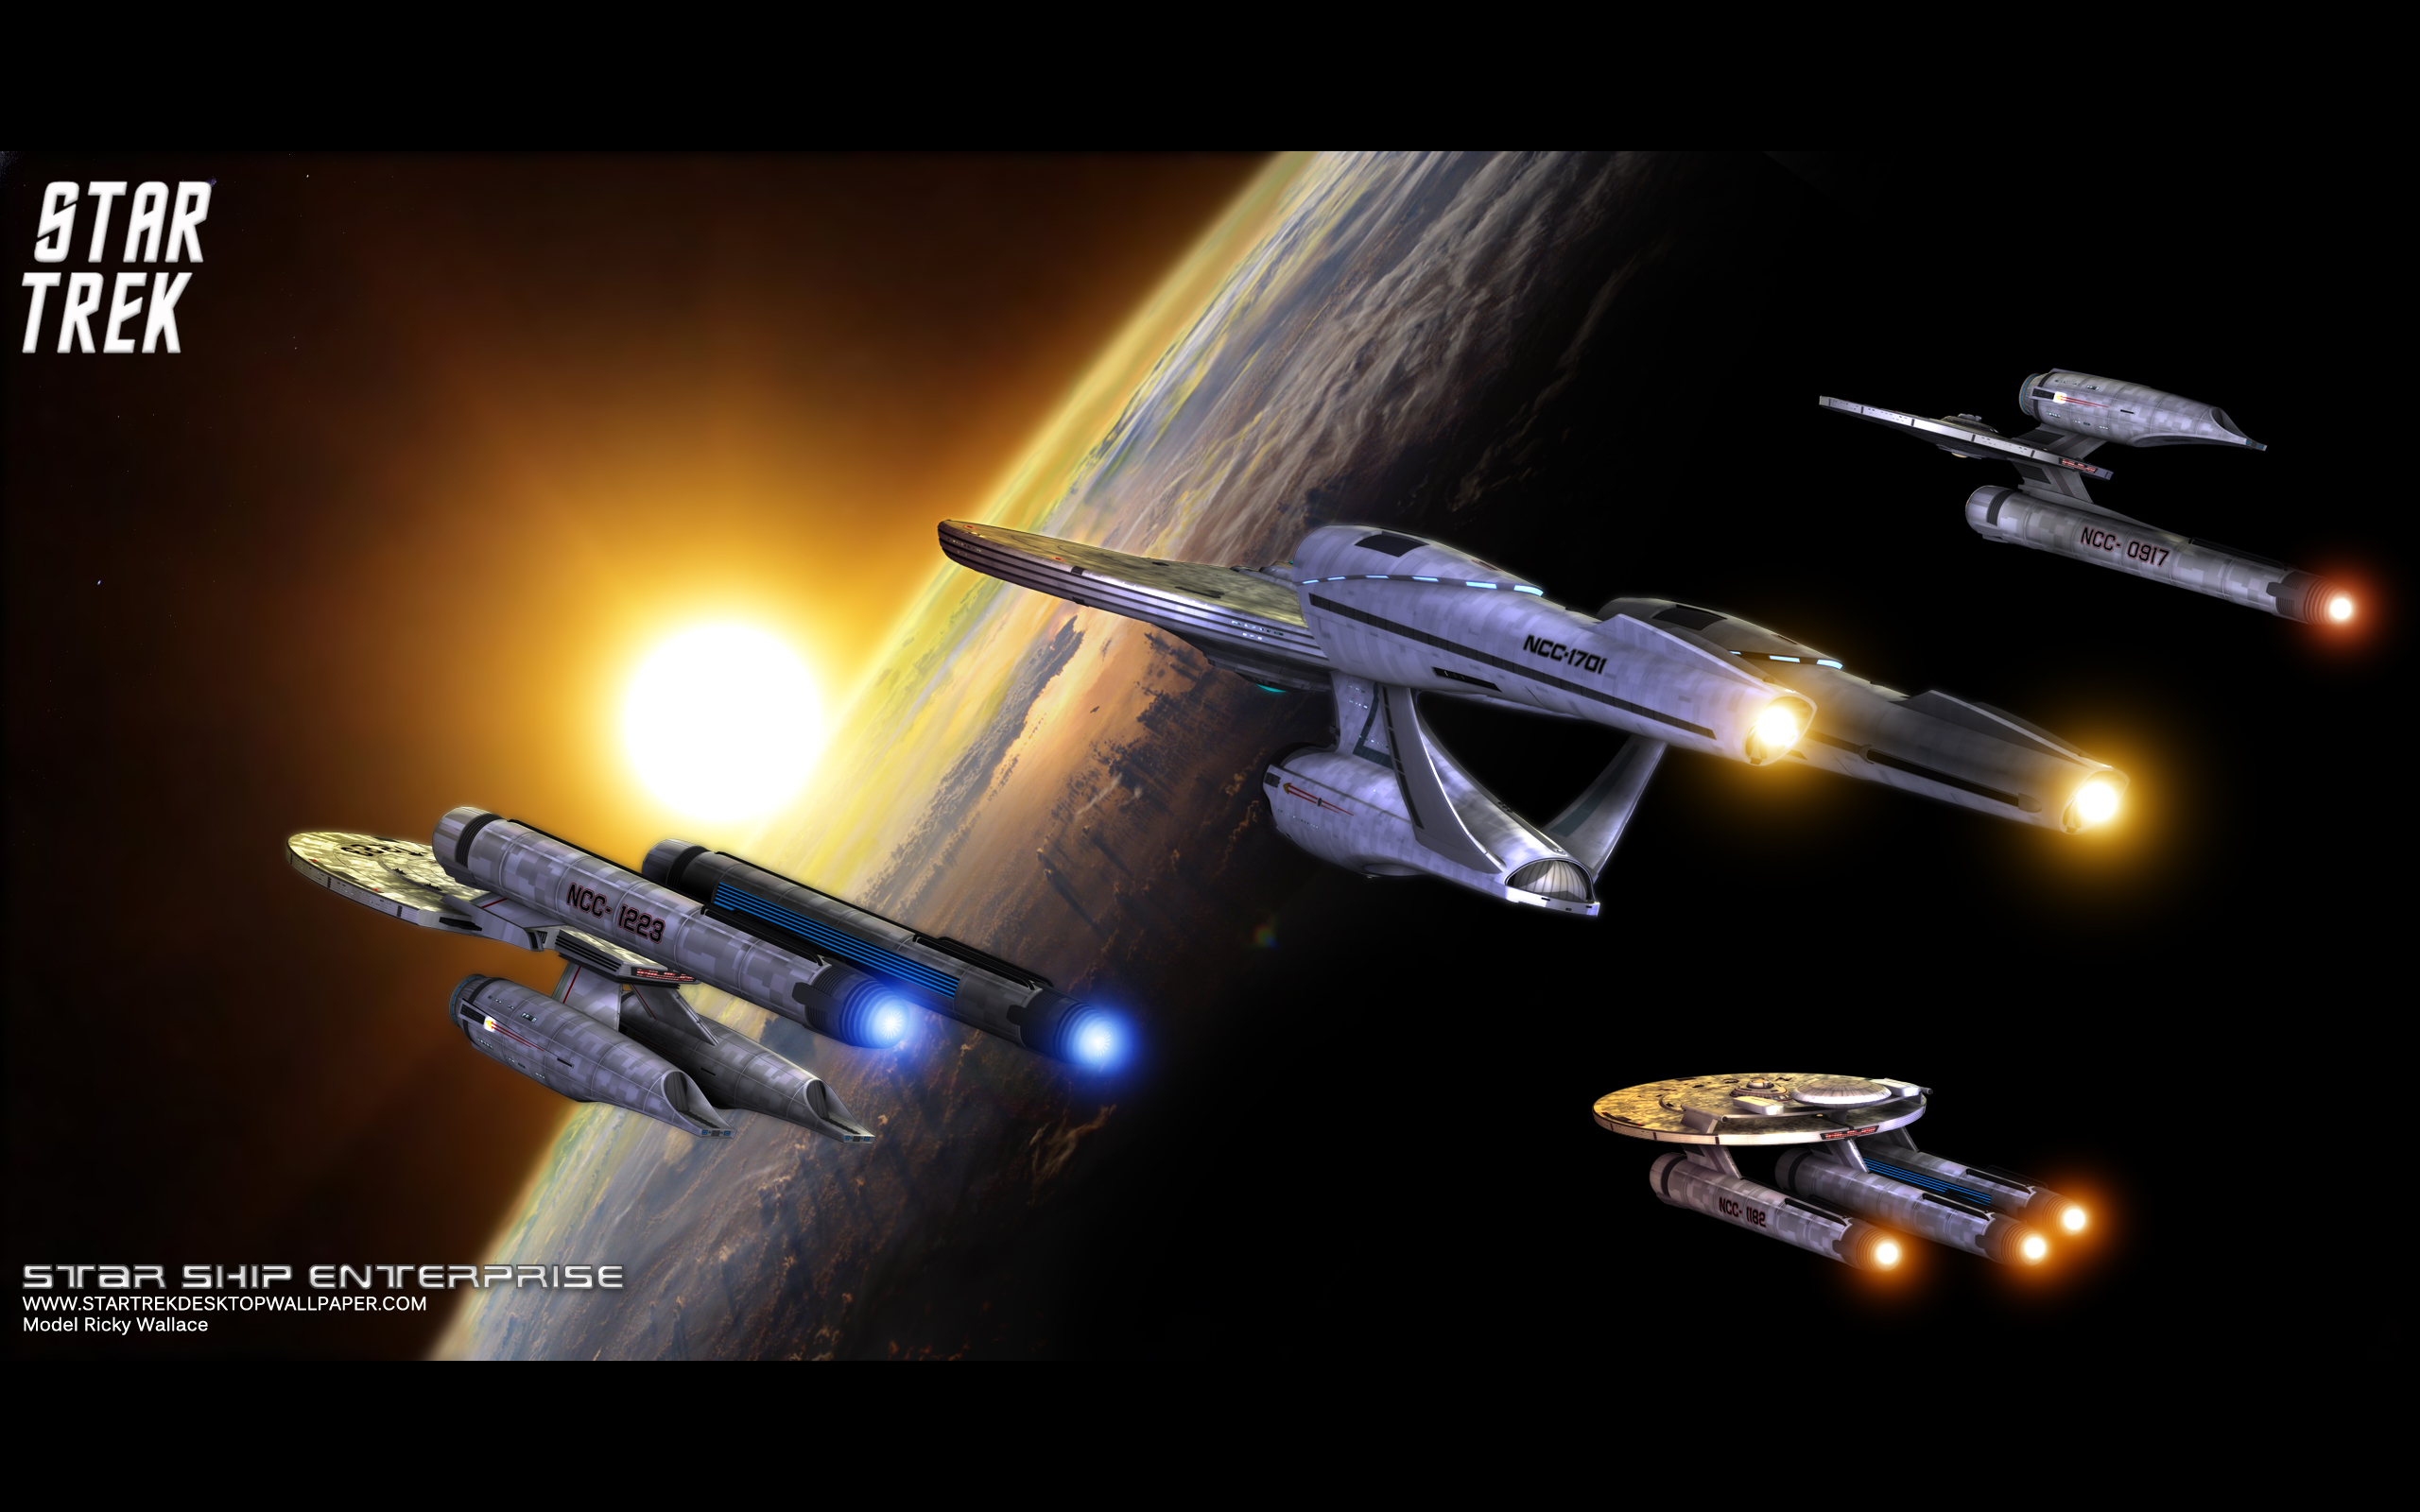 Trek Star Ship Enterprise Puter Desktop Wallpaper